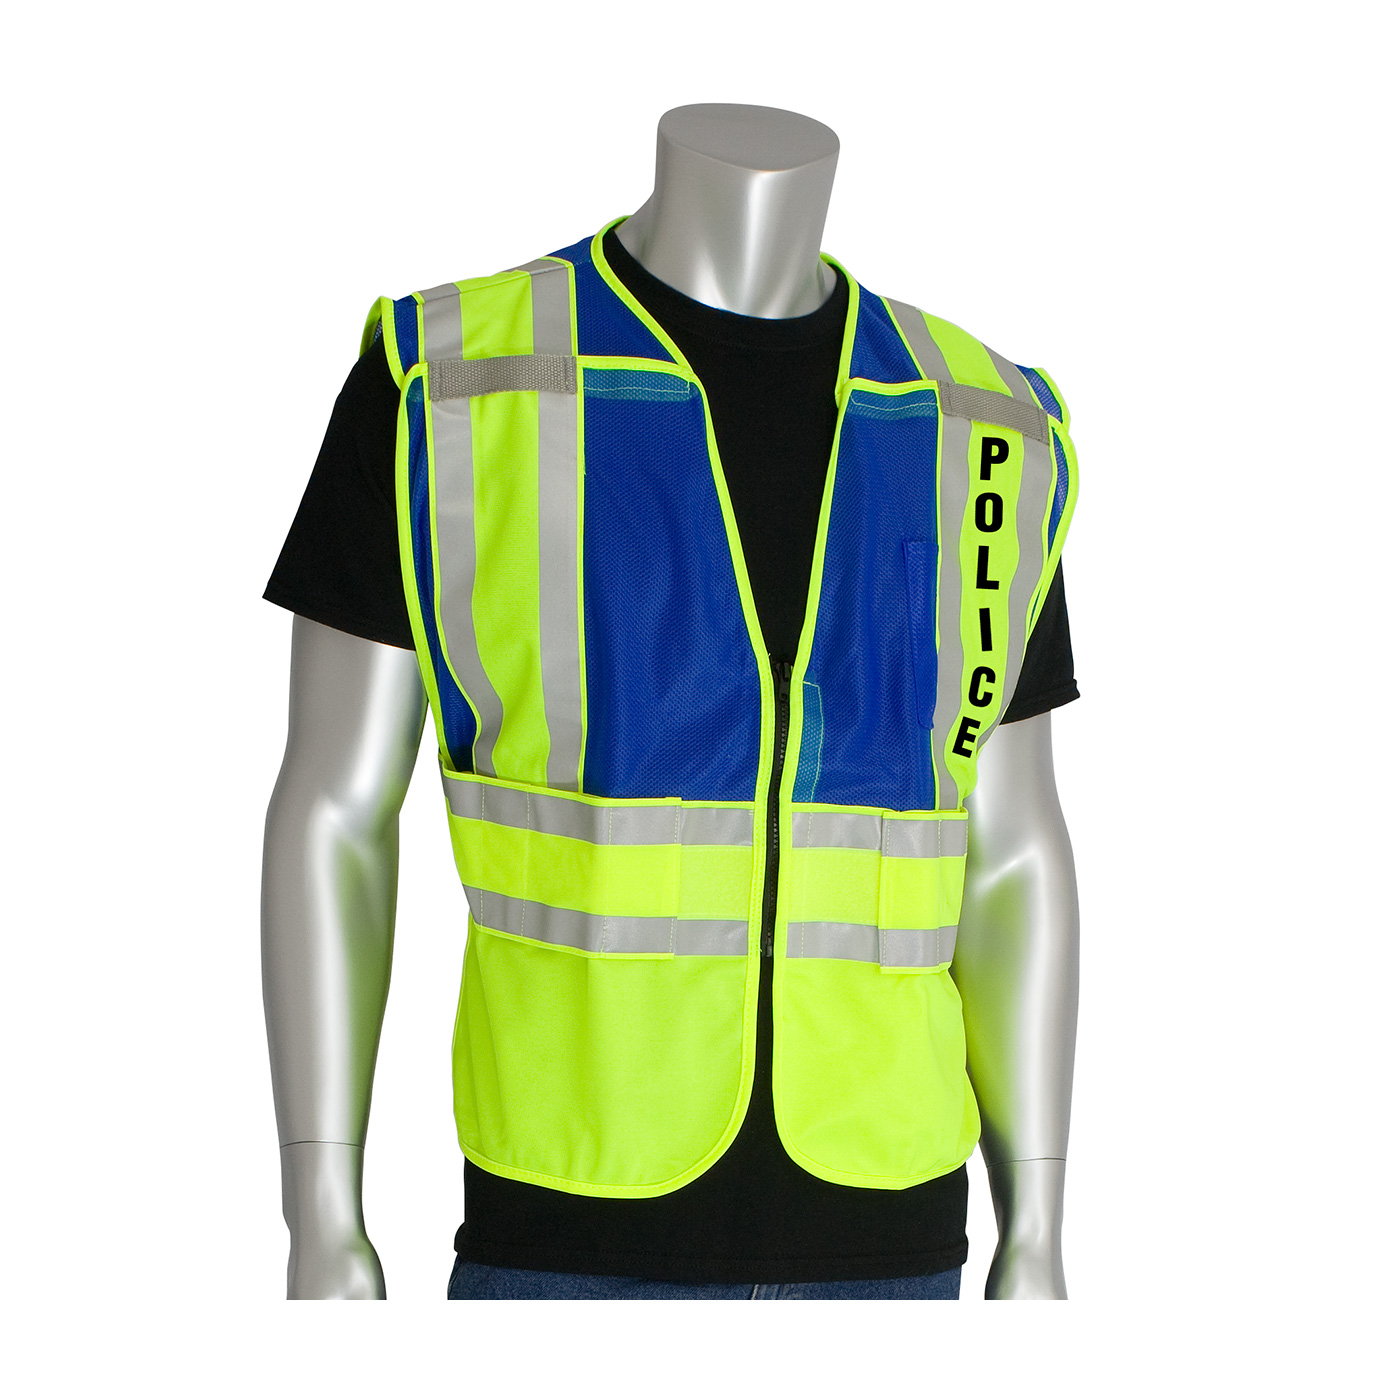 皮普®ANSIType P Class 2 Public Safety Vest - POLICE Logo #302-PSV-BLU